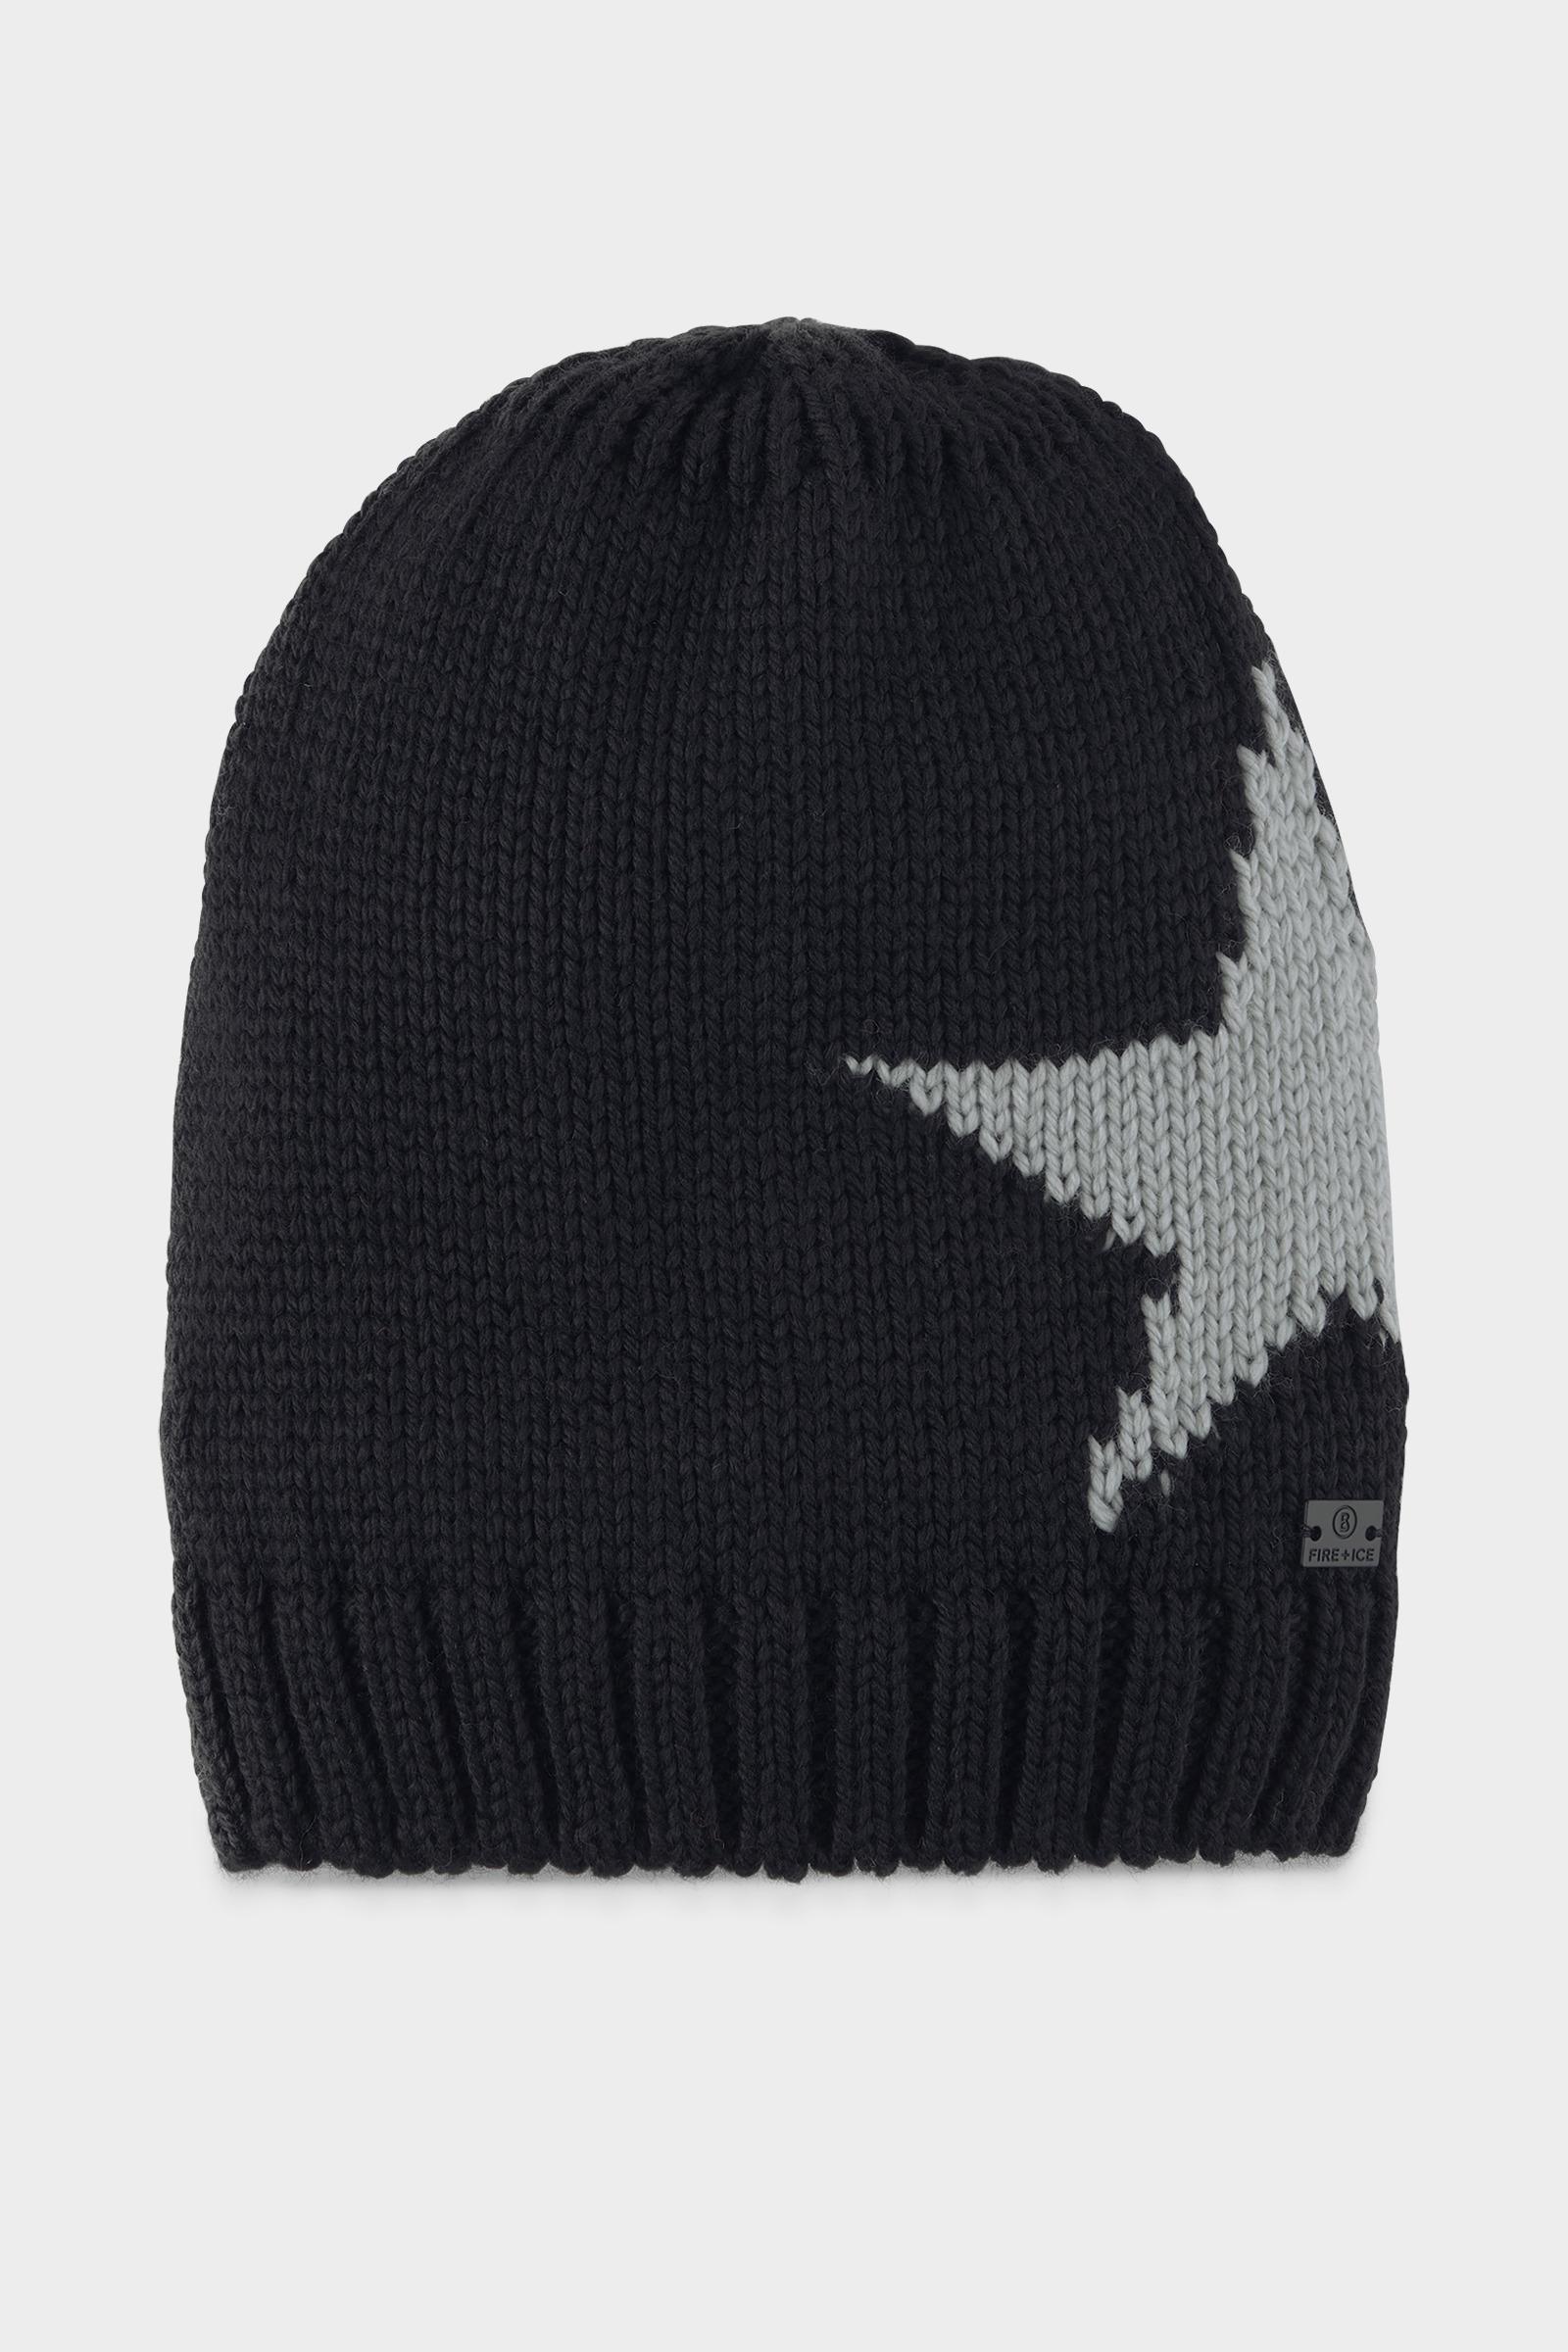 Bogner Wool Stars Knitted Hat In Black - Lyst